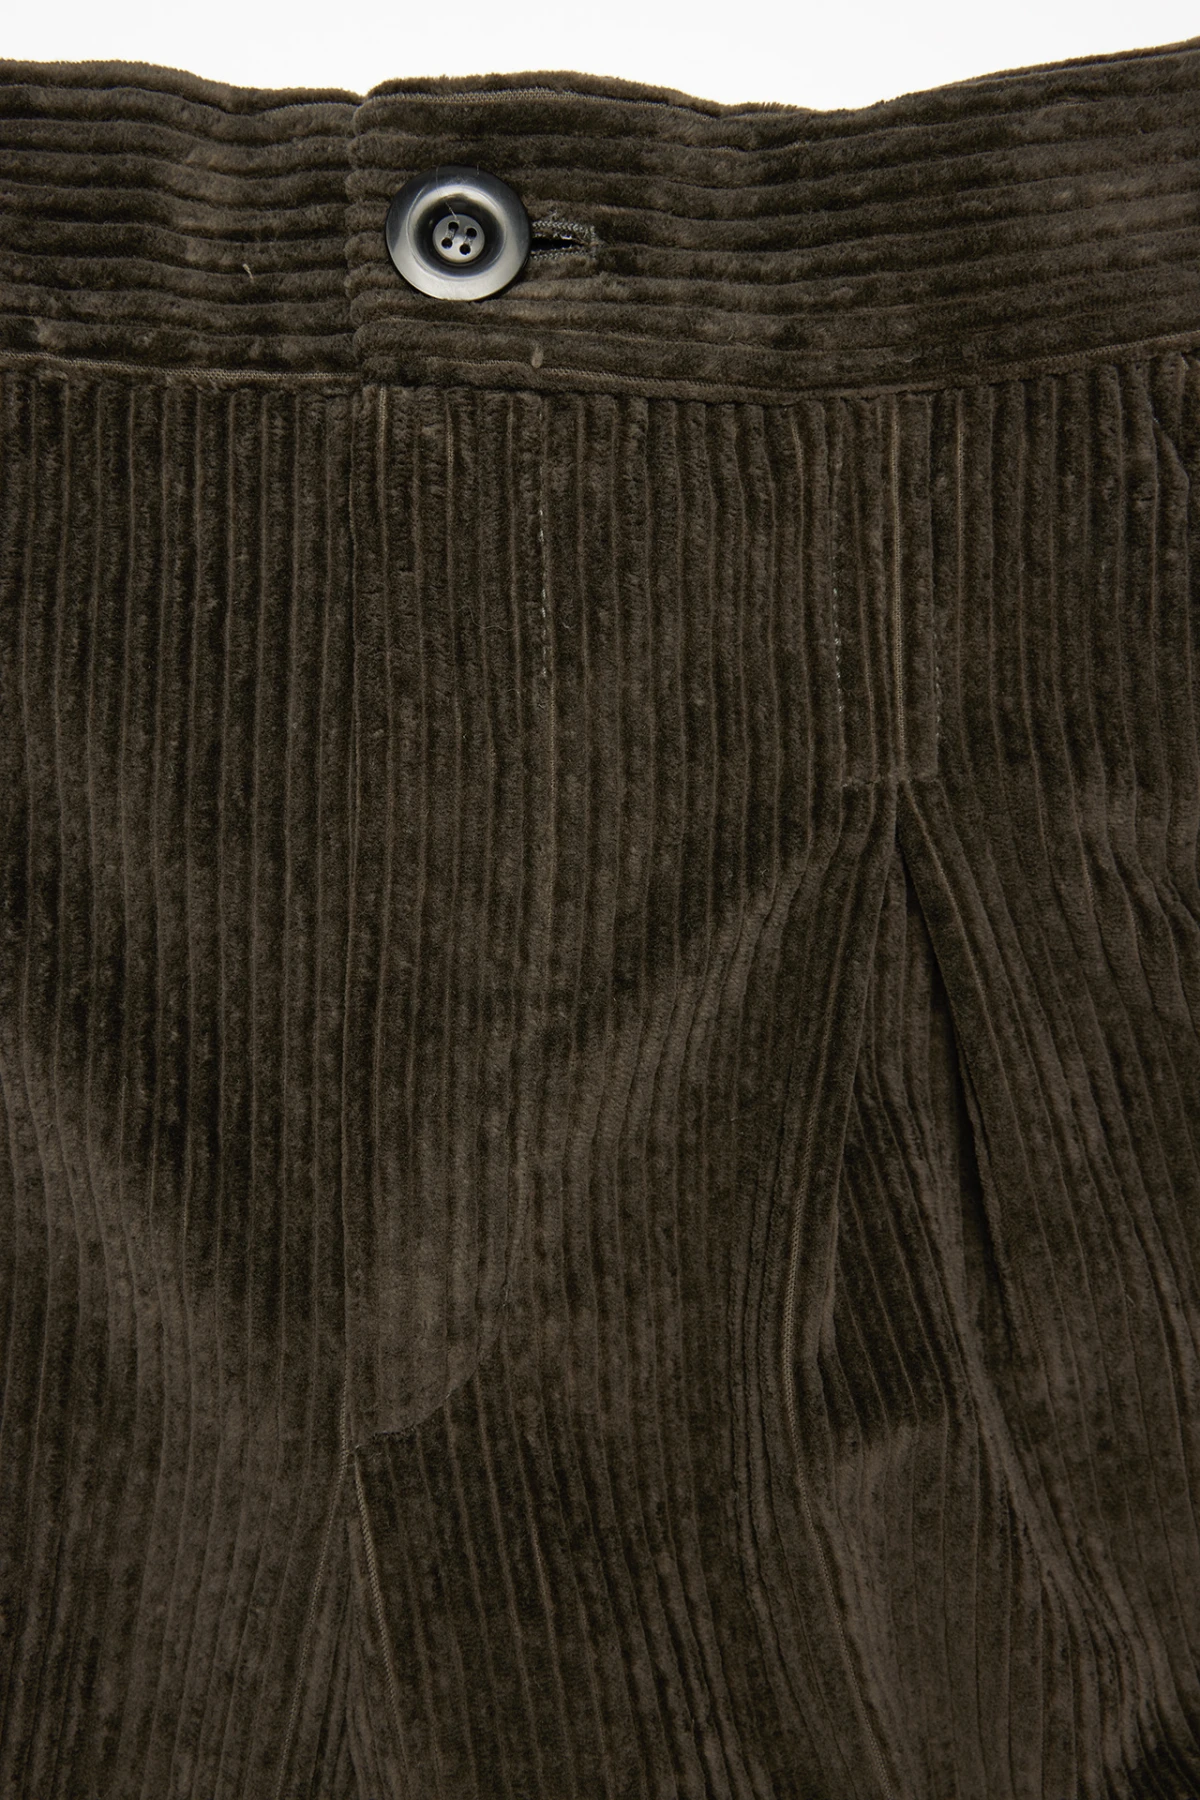 Lorelei Brown Trousers // Miista Clothing // Made in Spain